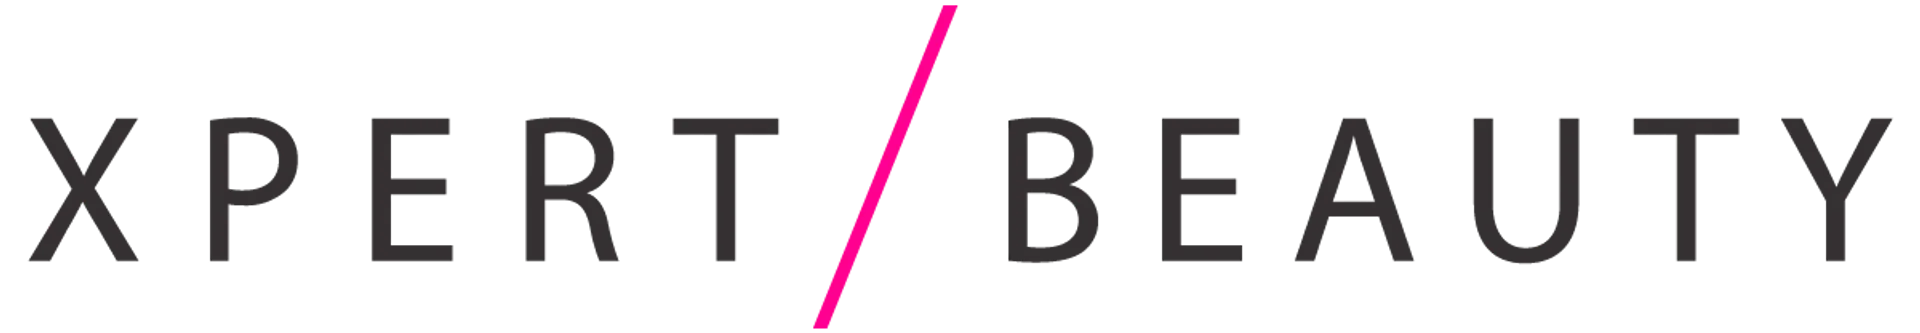 XPERT BEAUTY logo